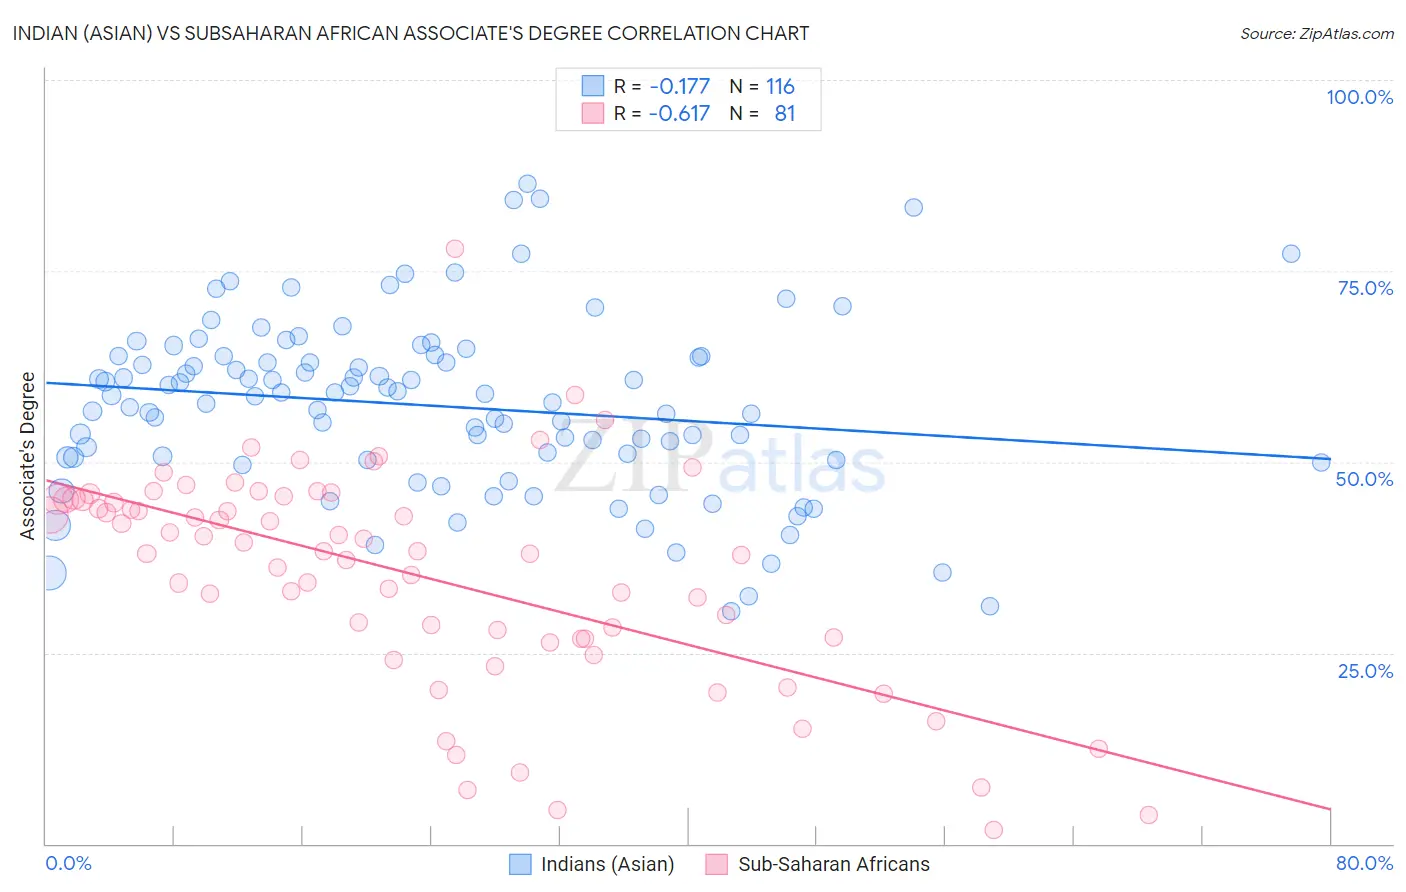 Indian (Asian) vs Subsaharan African Associate's Degree